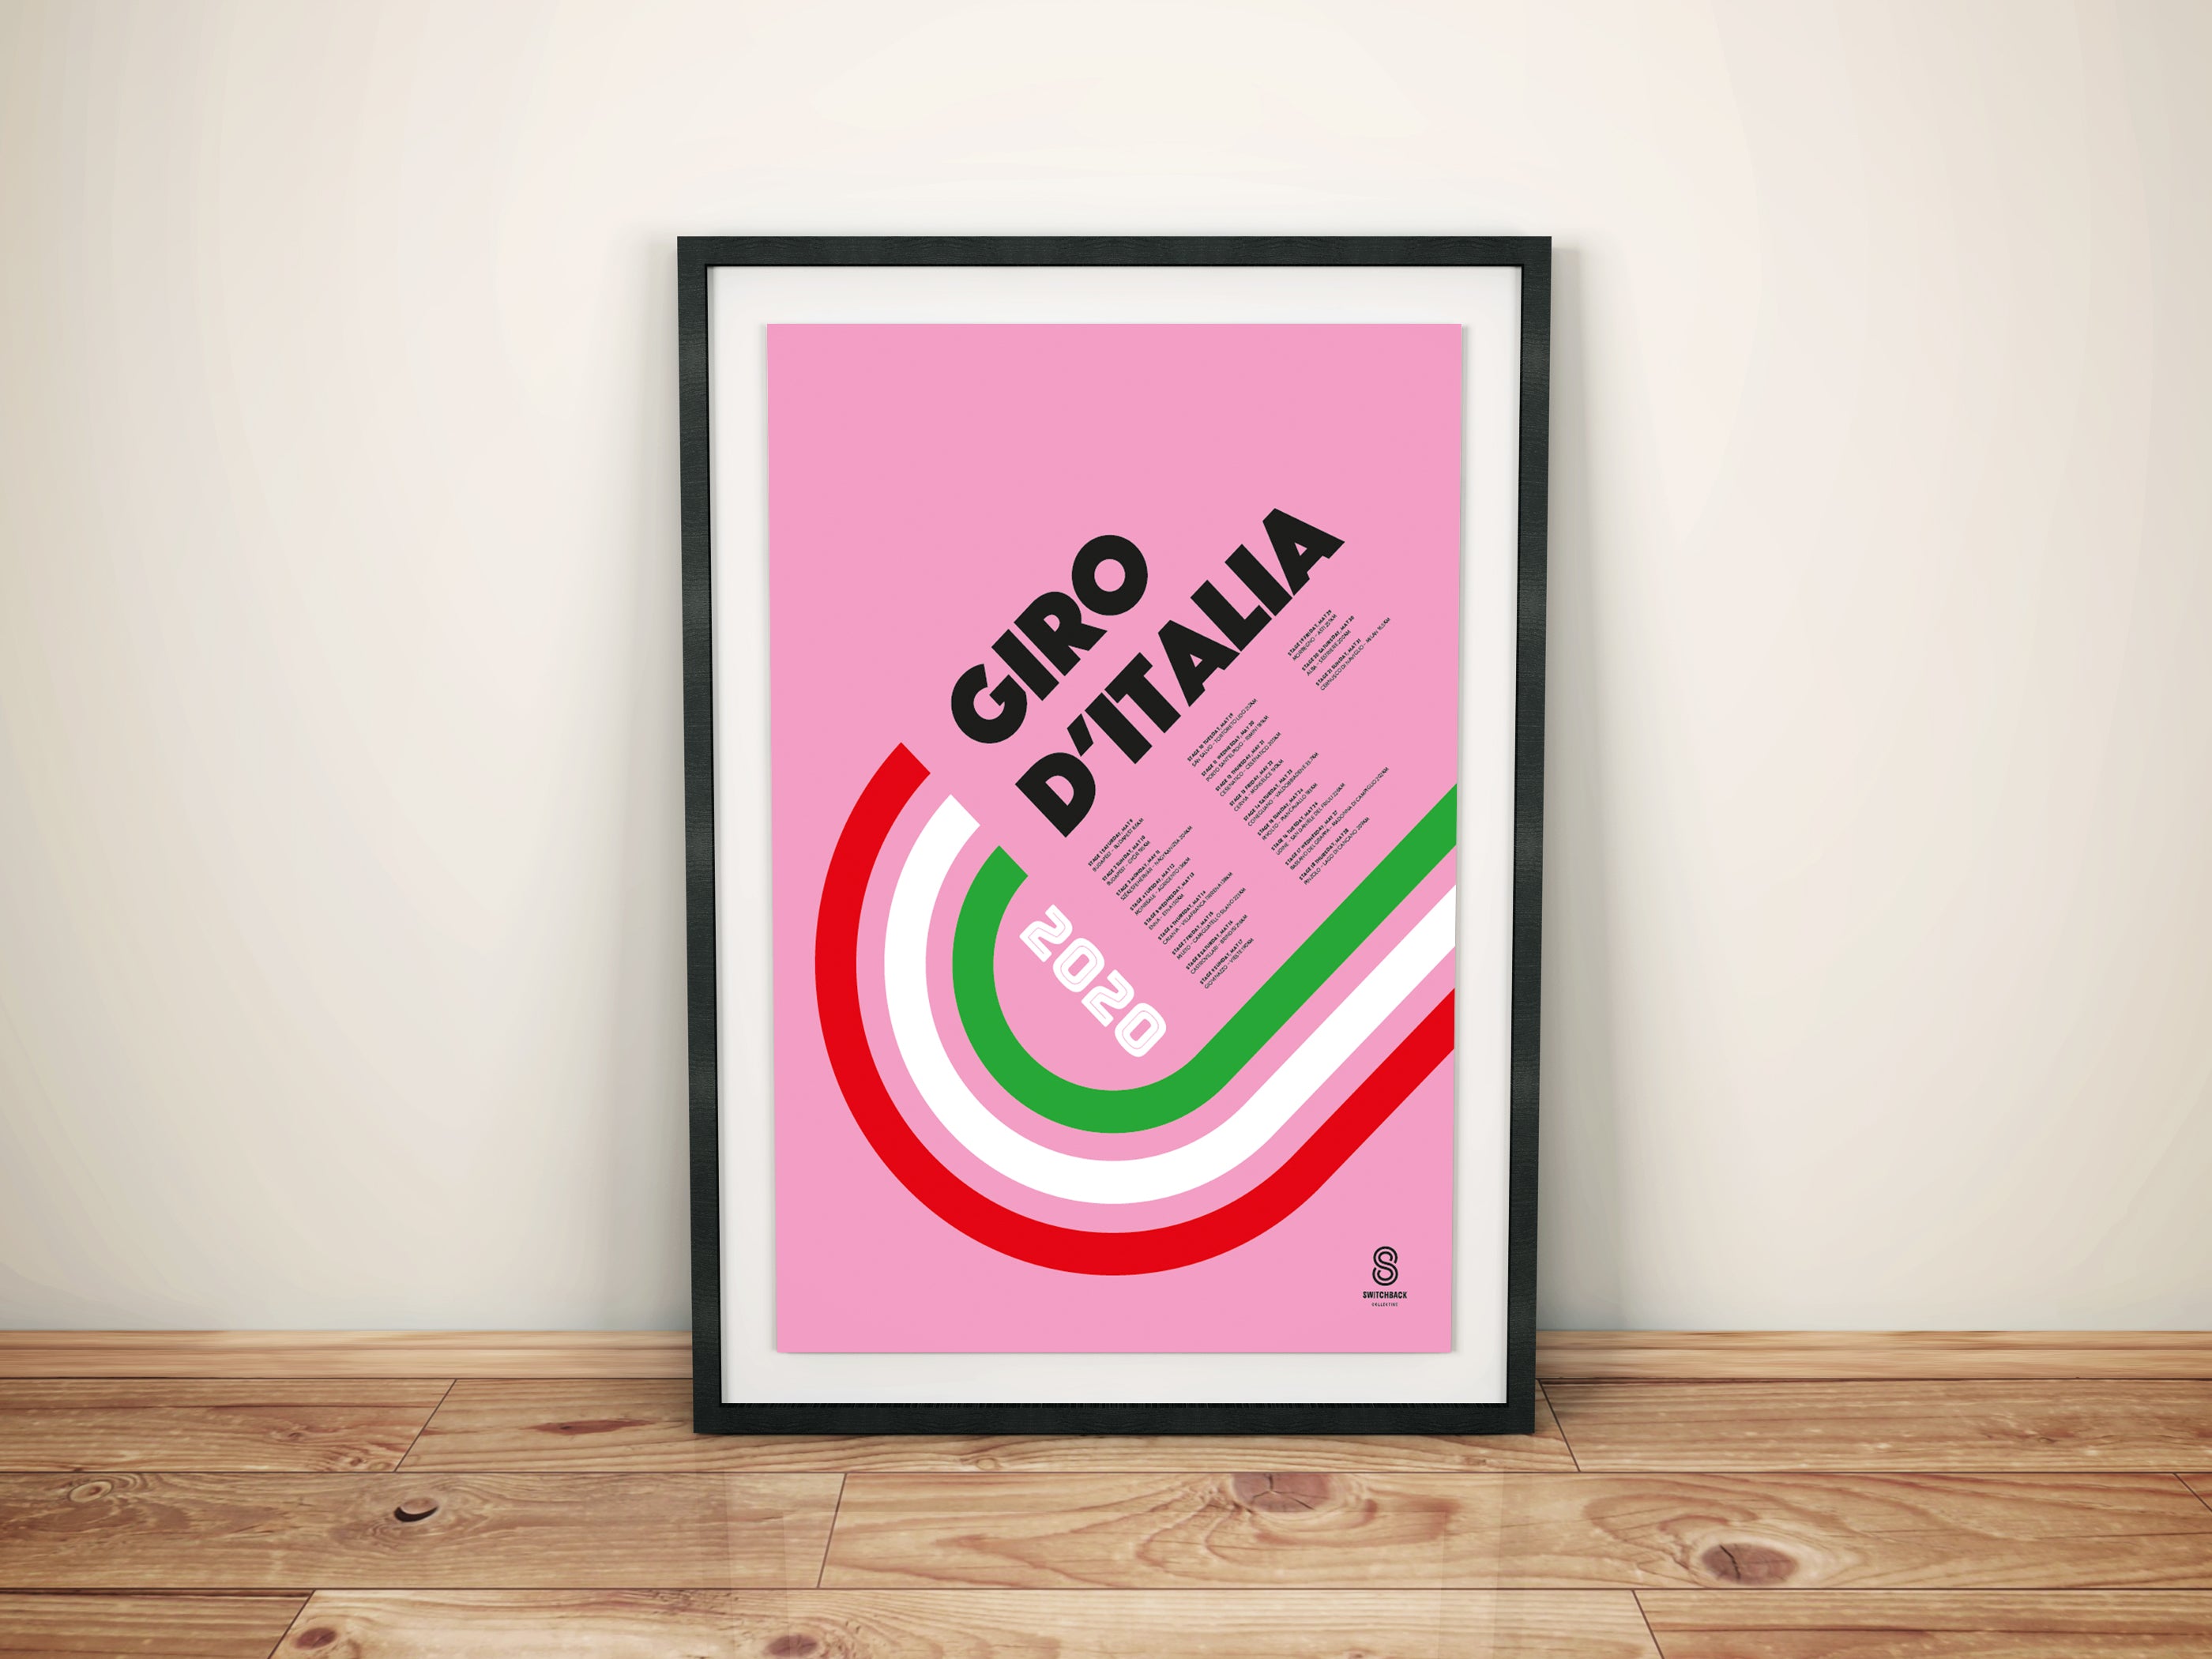 Giro d’Italia 2020 - Cycling Print